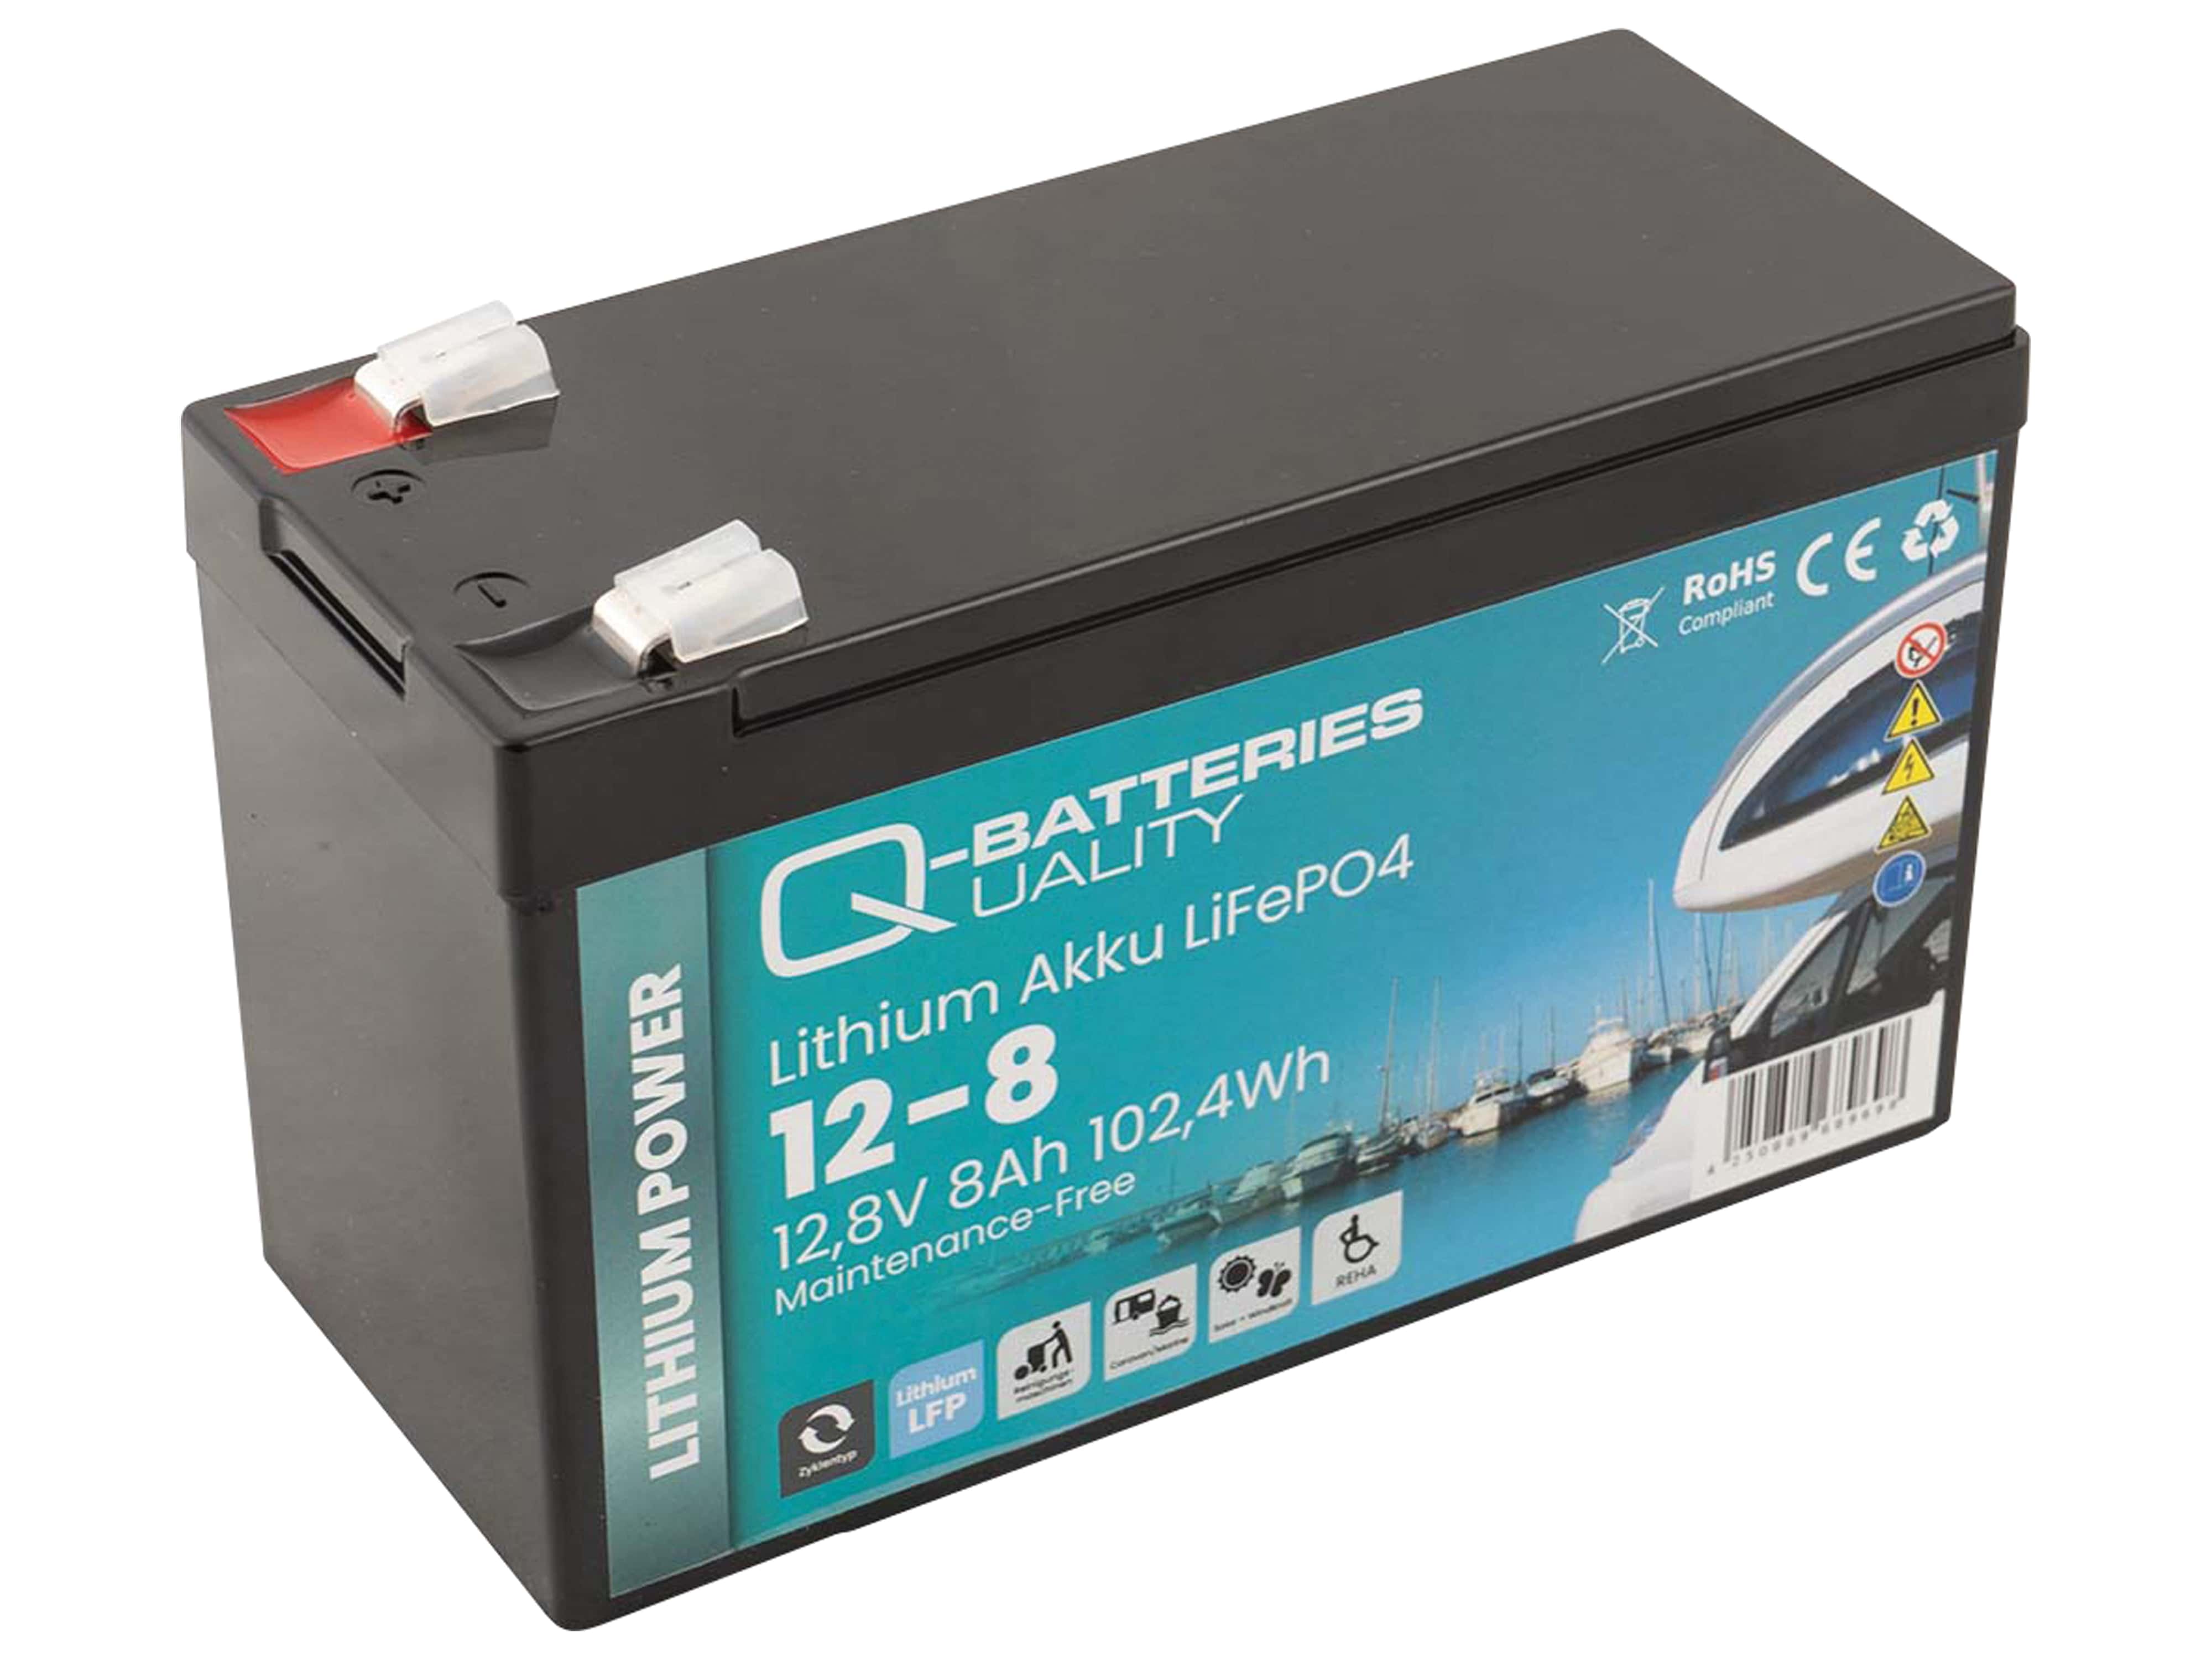 Q-BATTERIES Lithium Akku 12-8 12,8V 8Ah, 102,4Wh LiFePO4 Batterie